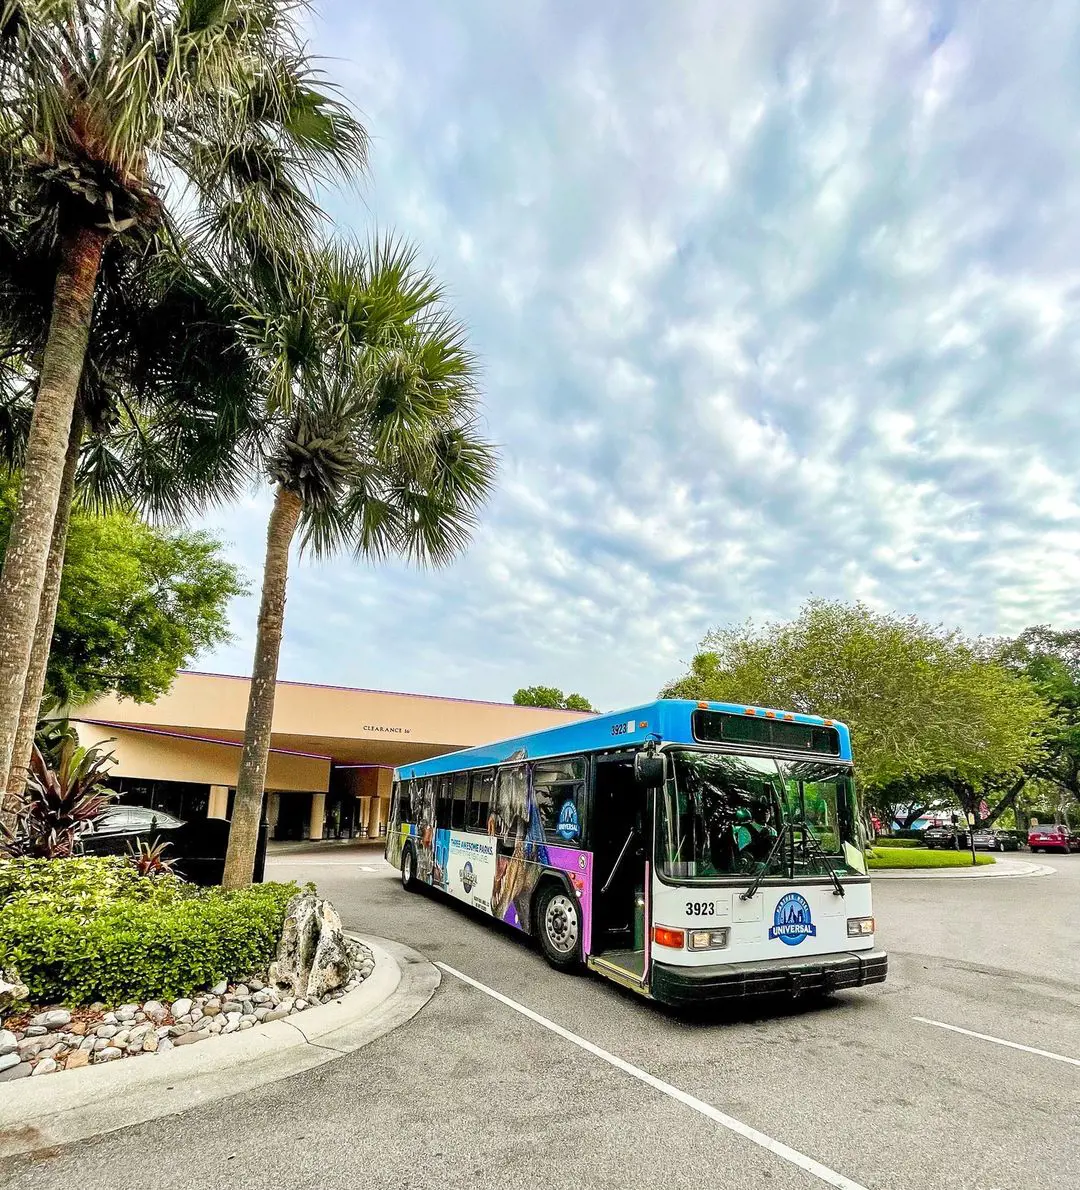 Orlando Hotels with Cruise Shuttles